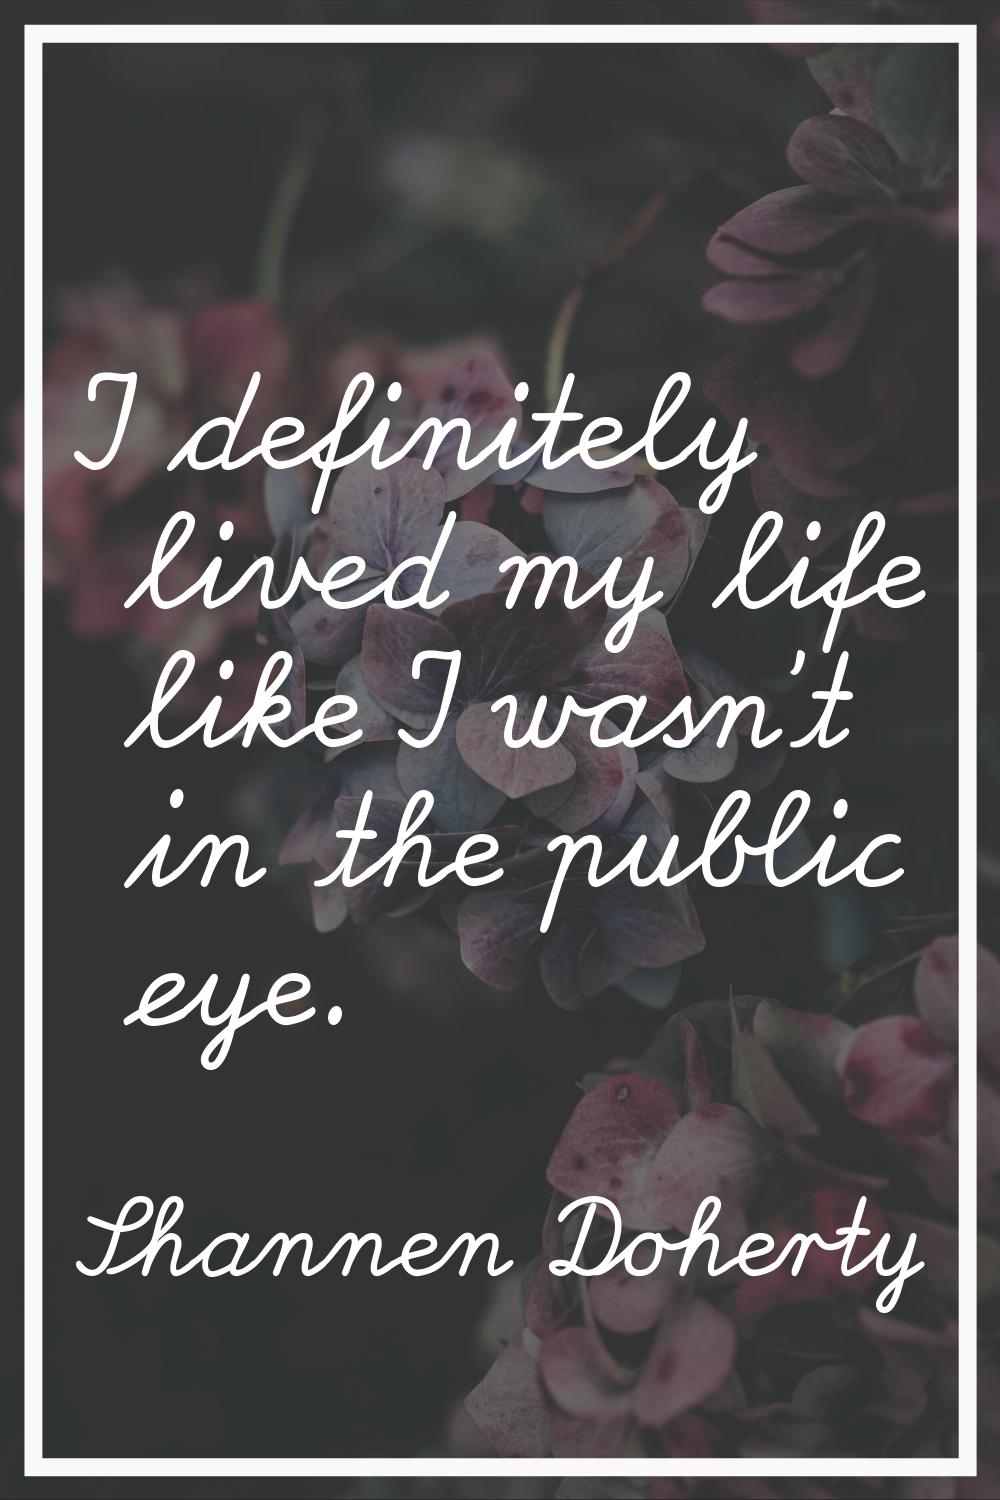 I definitely lived my life like I wasn't in the public eye.